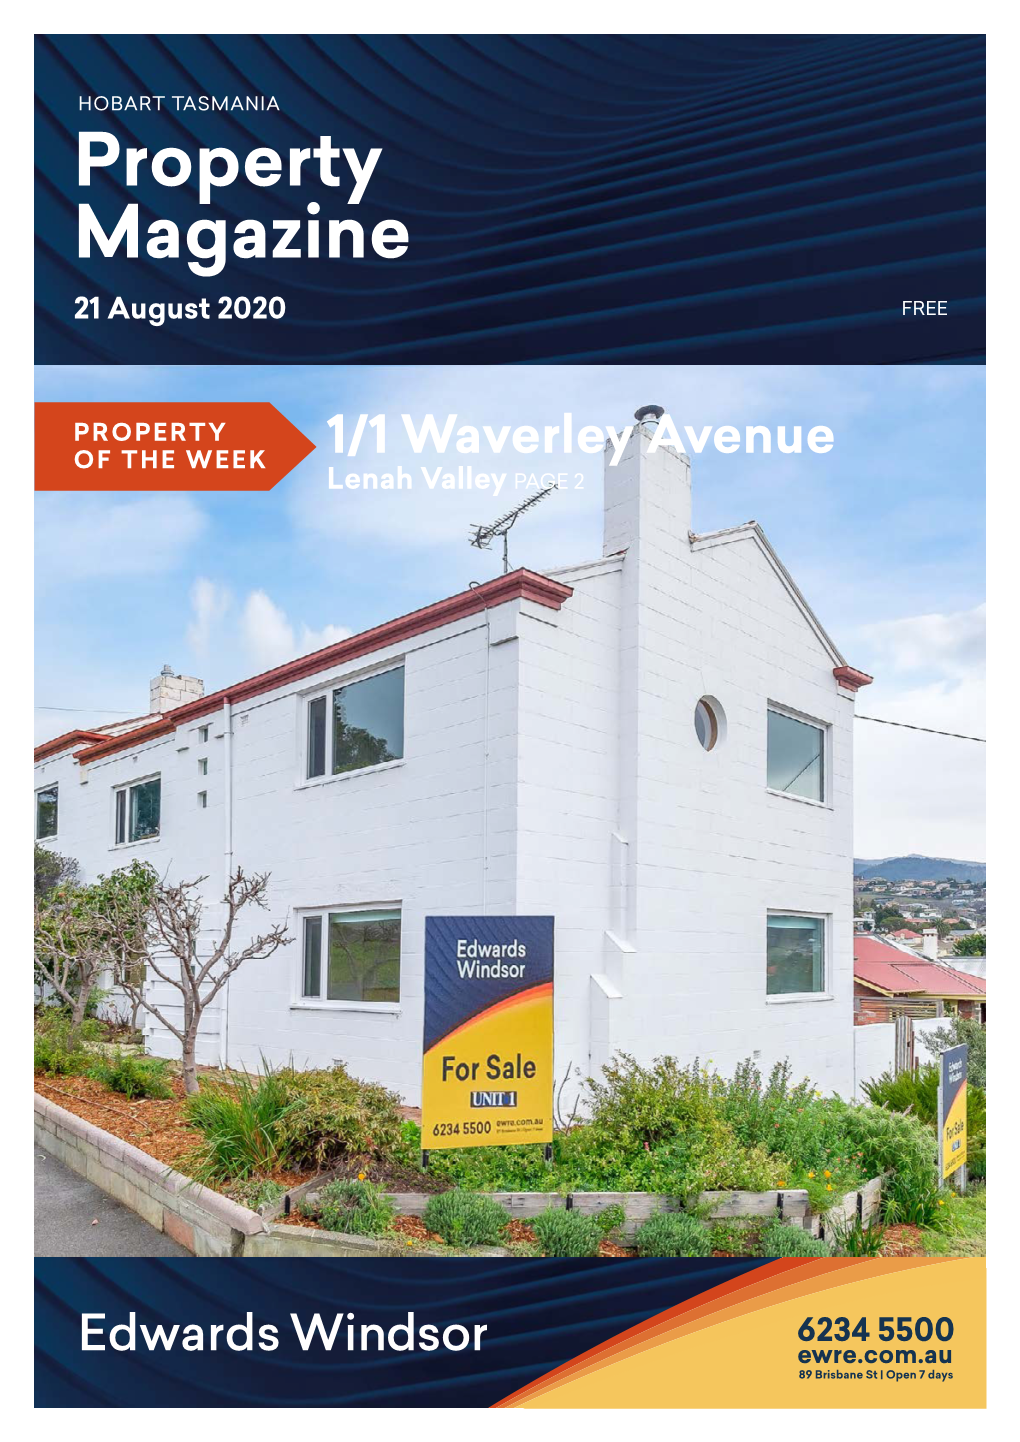 Property Magazine 21 August 2020 FREE